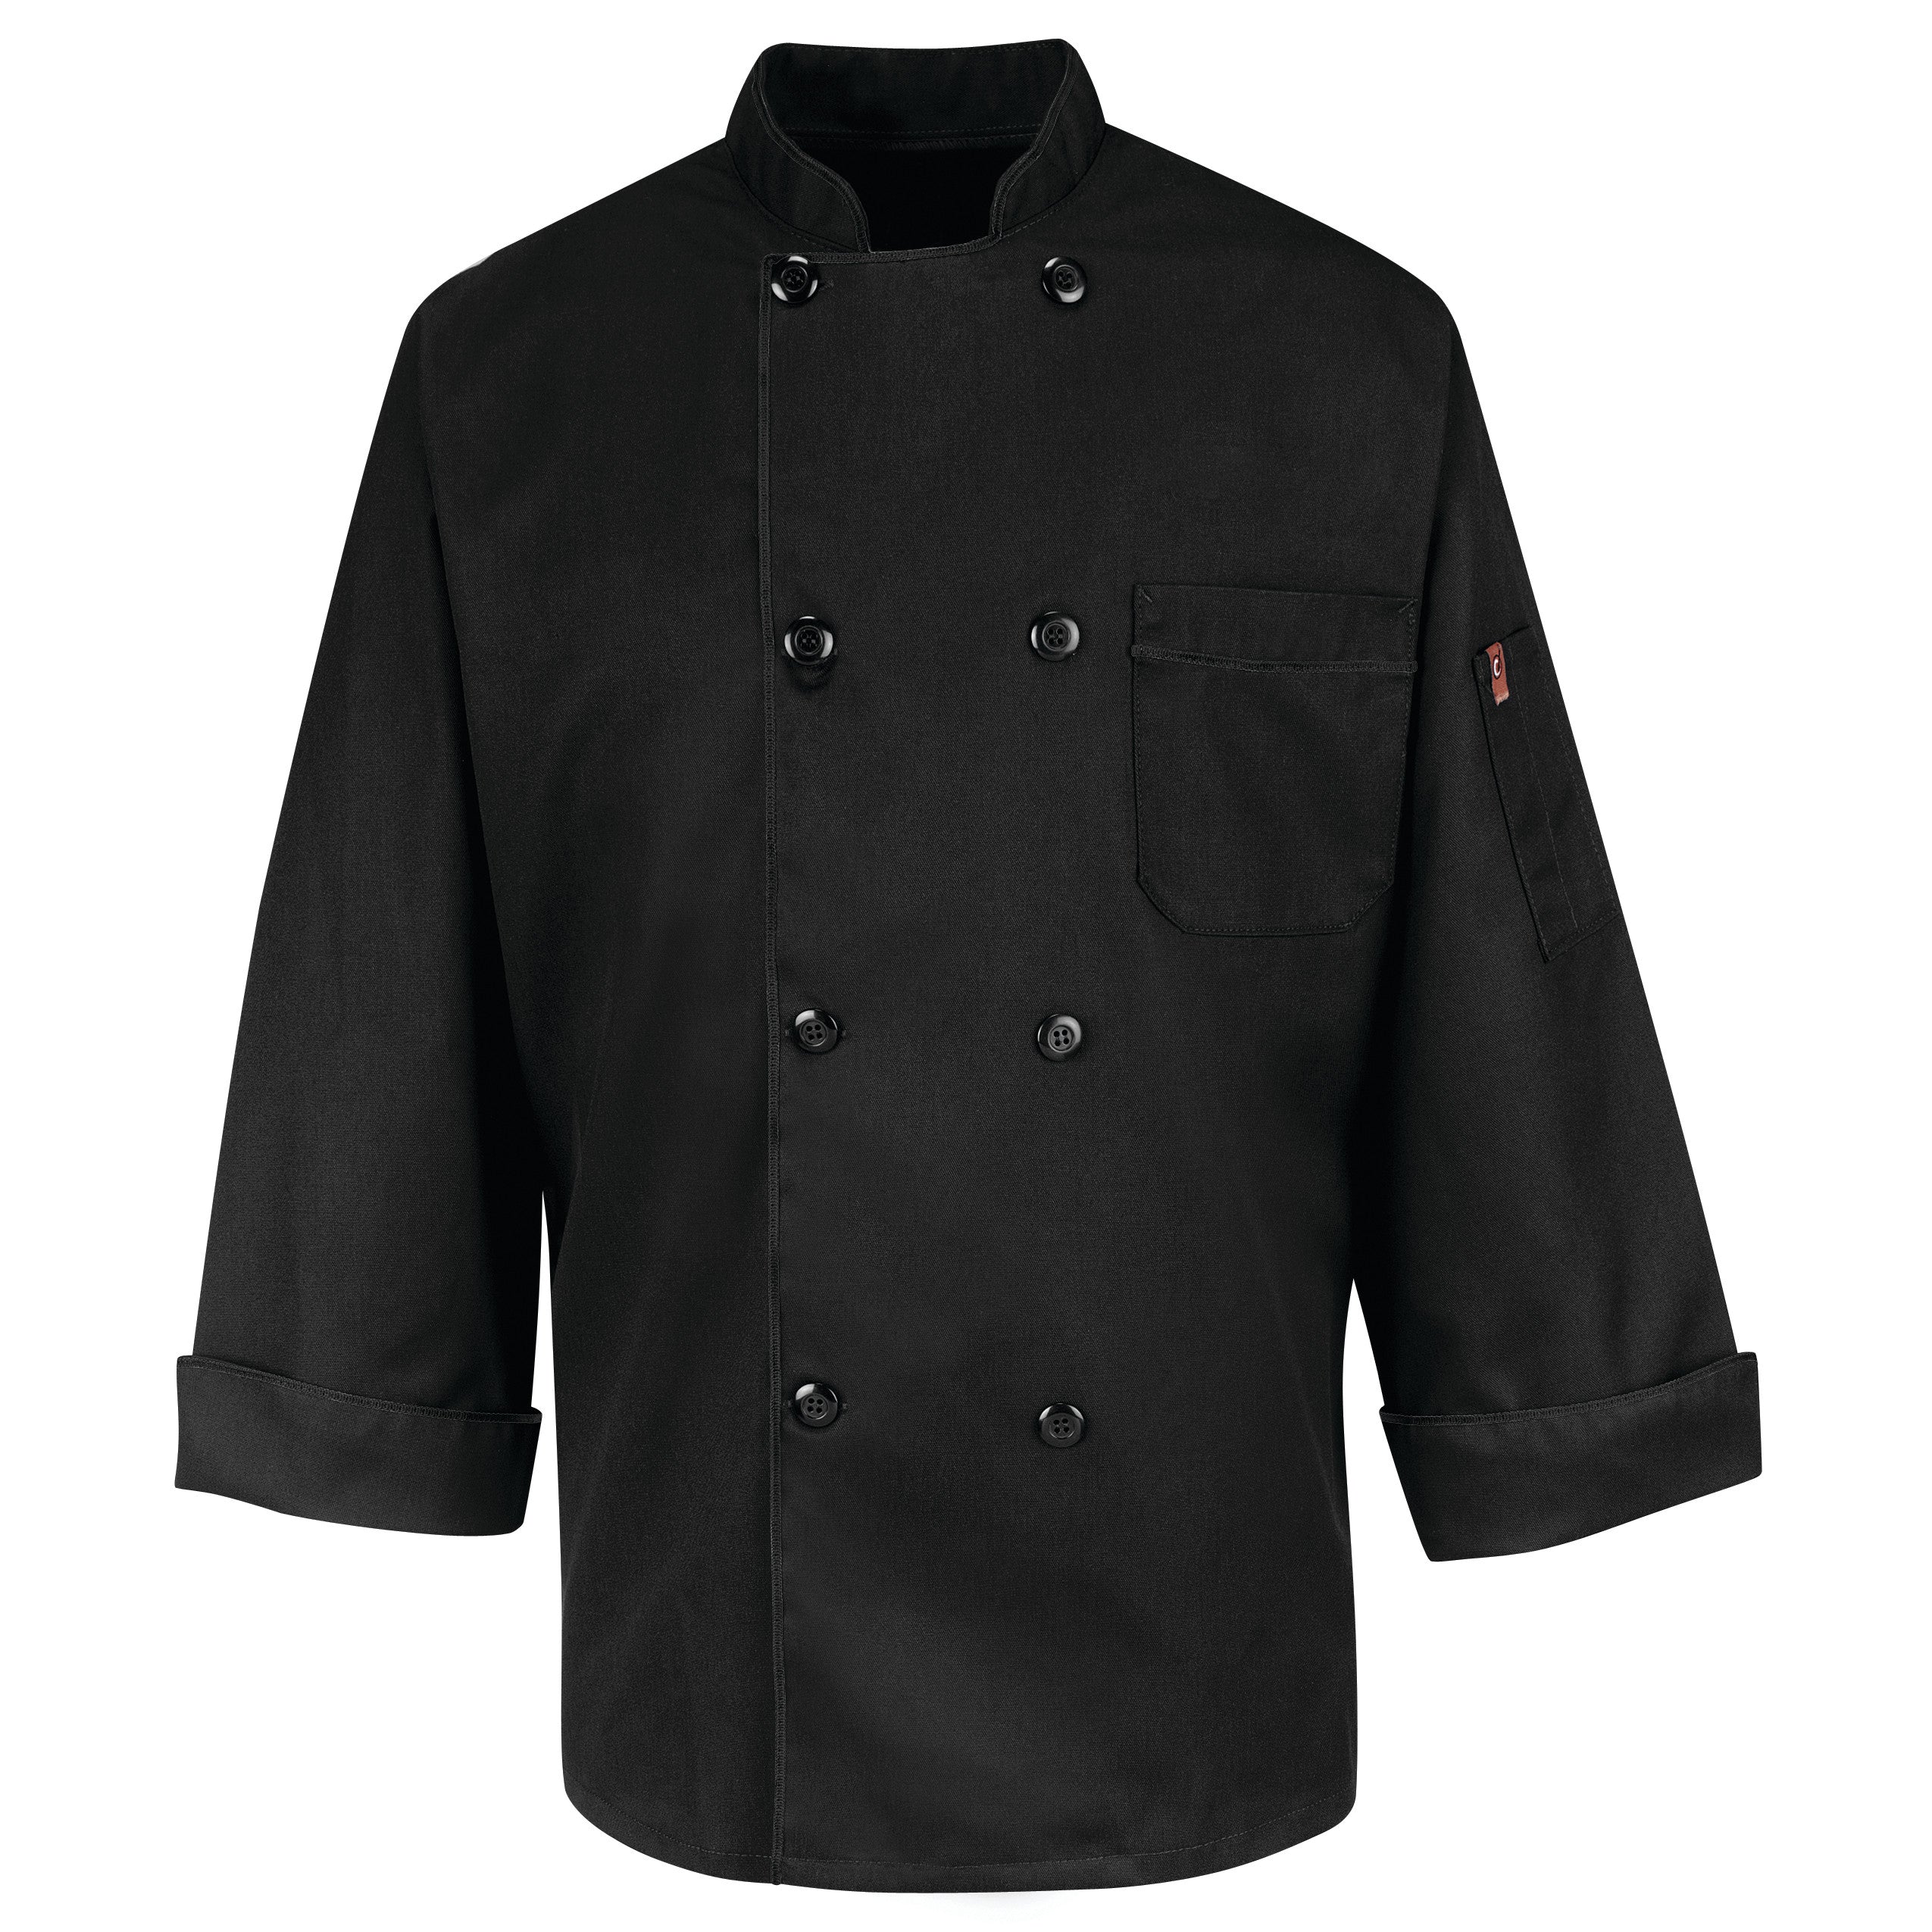 Eight Pearl Button Black Chef Coat KT76 - Black